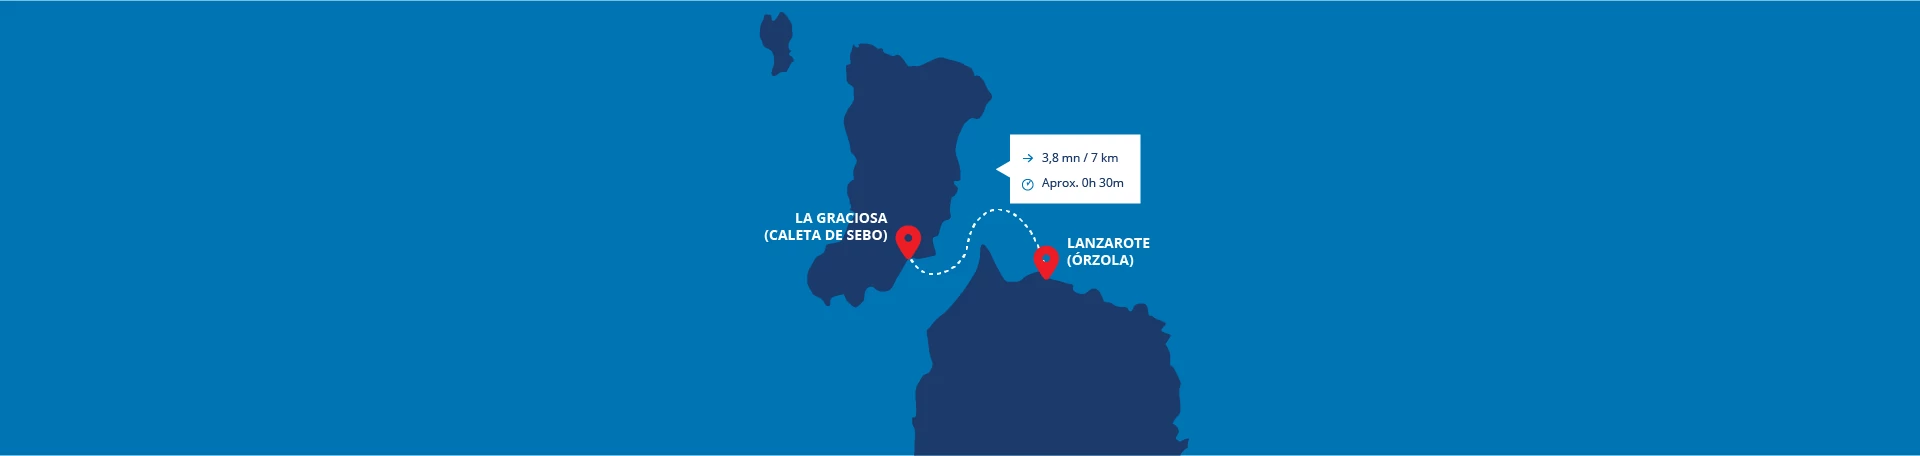 Map of the Lineas Romero boat route between Lanzarote and La Graciosa